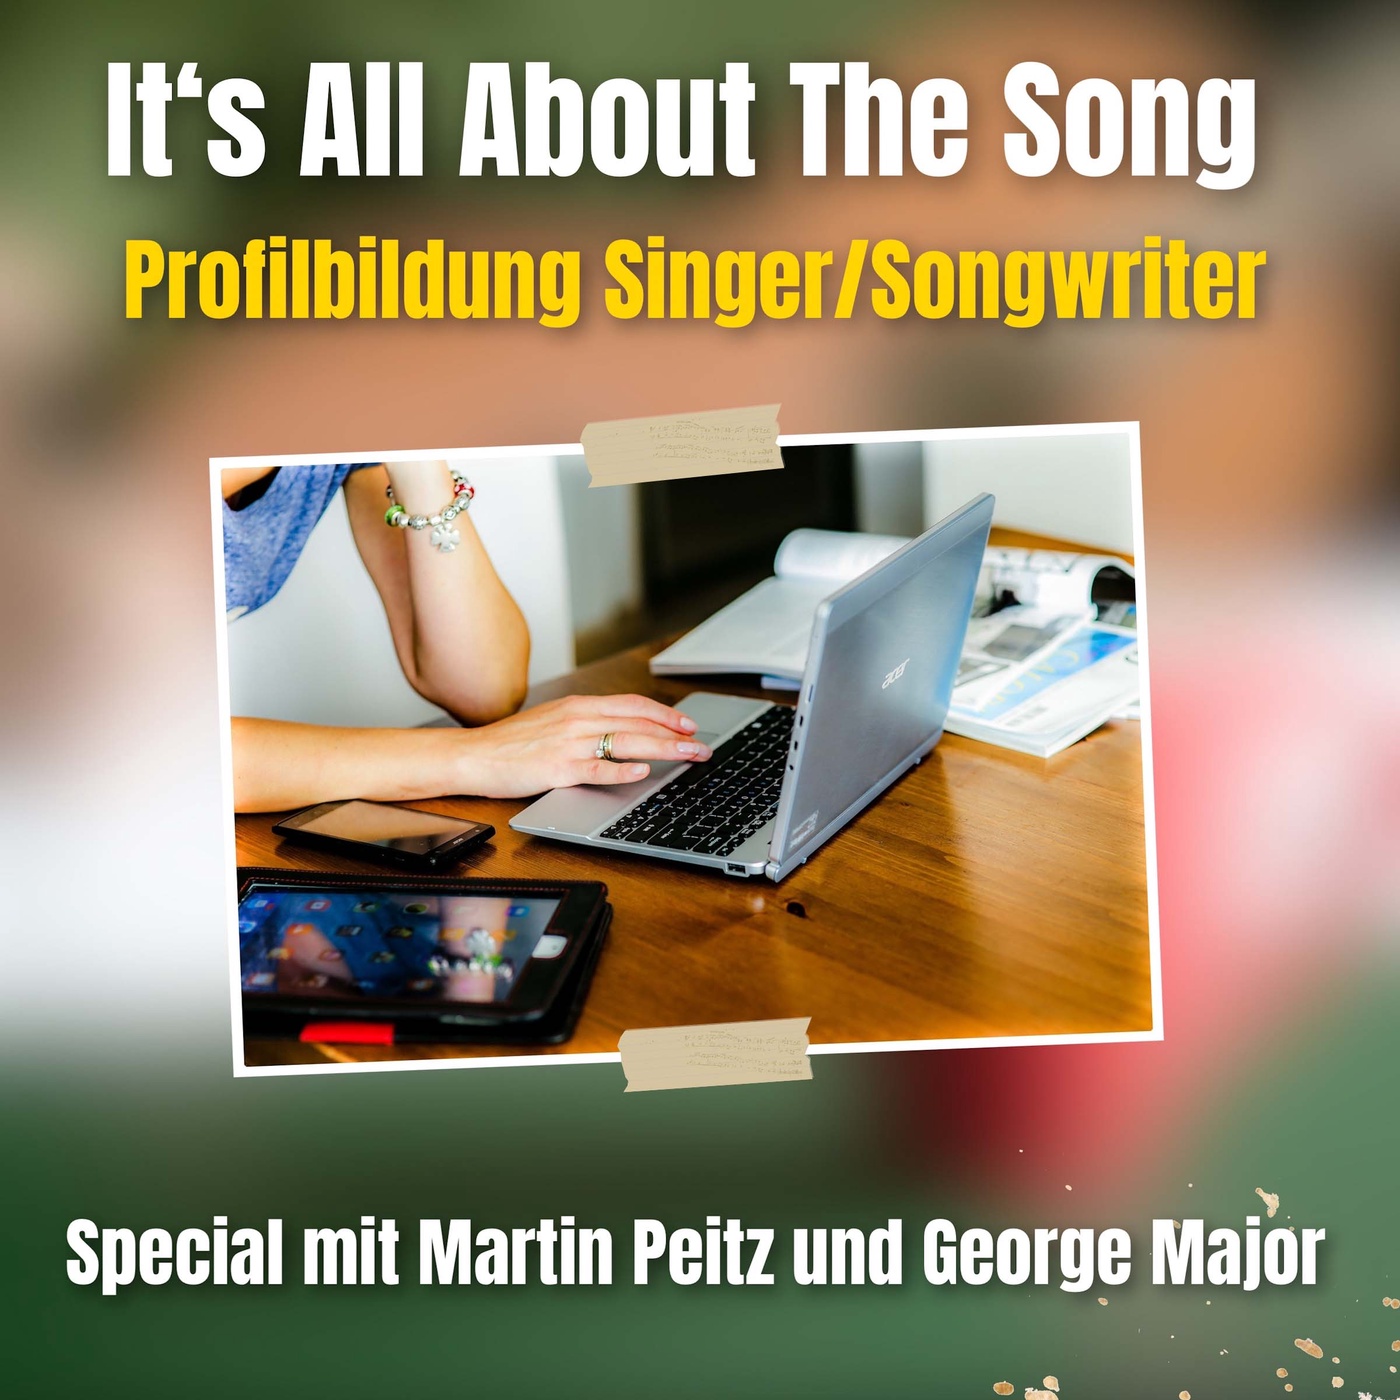 Profilbildung Singer/Songwriter